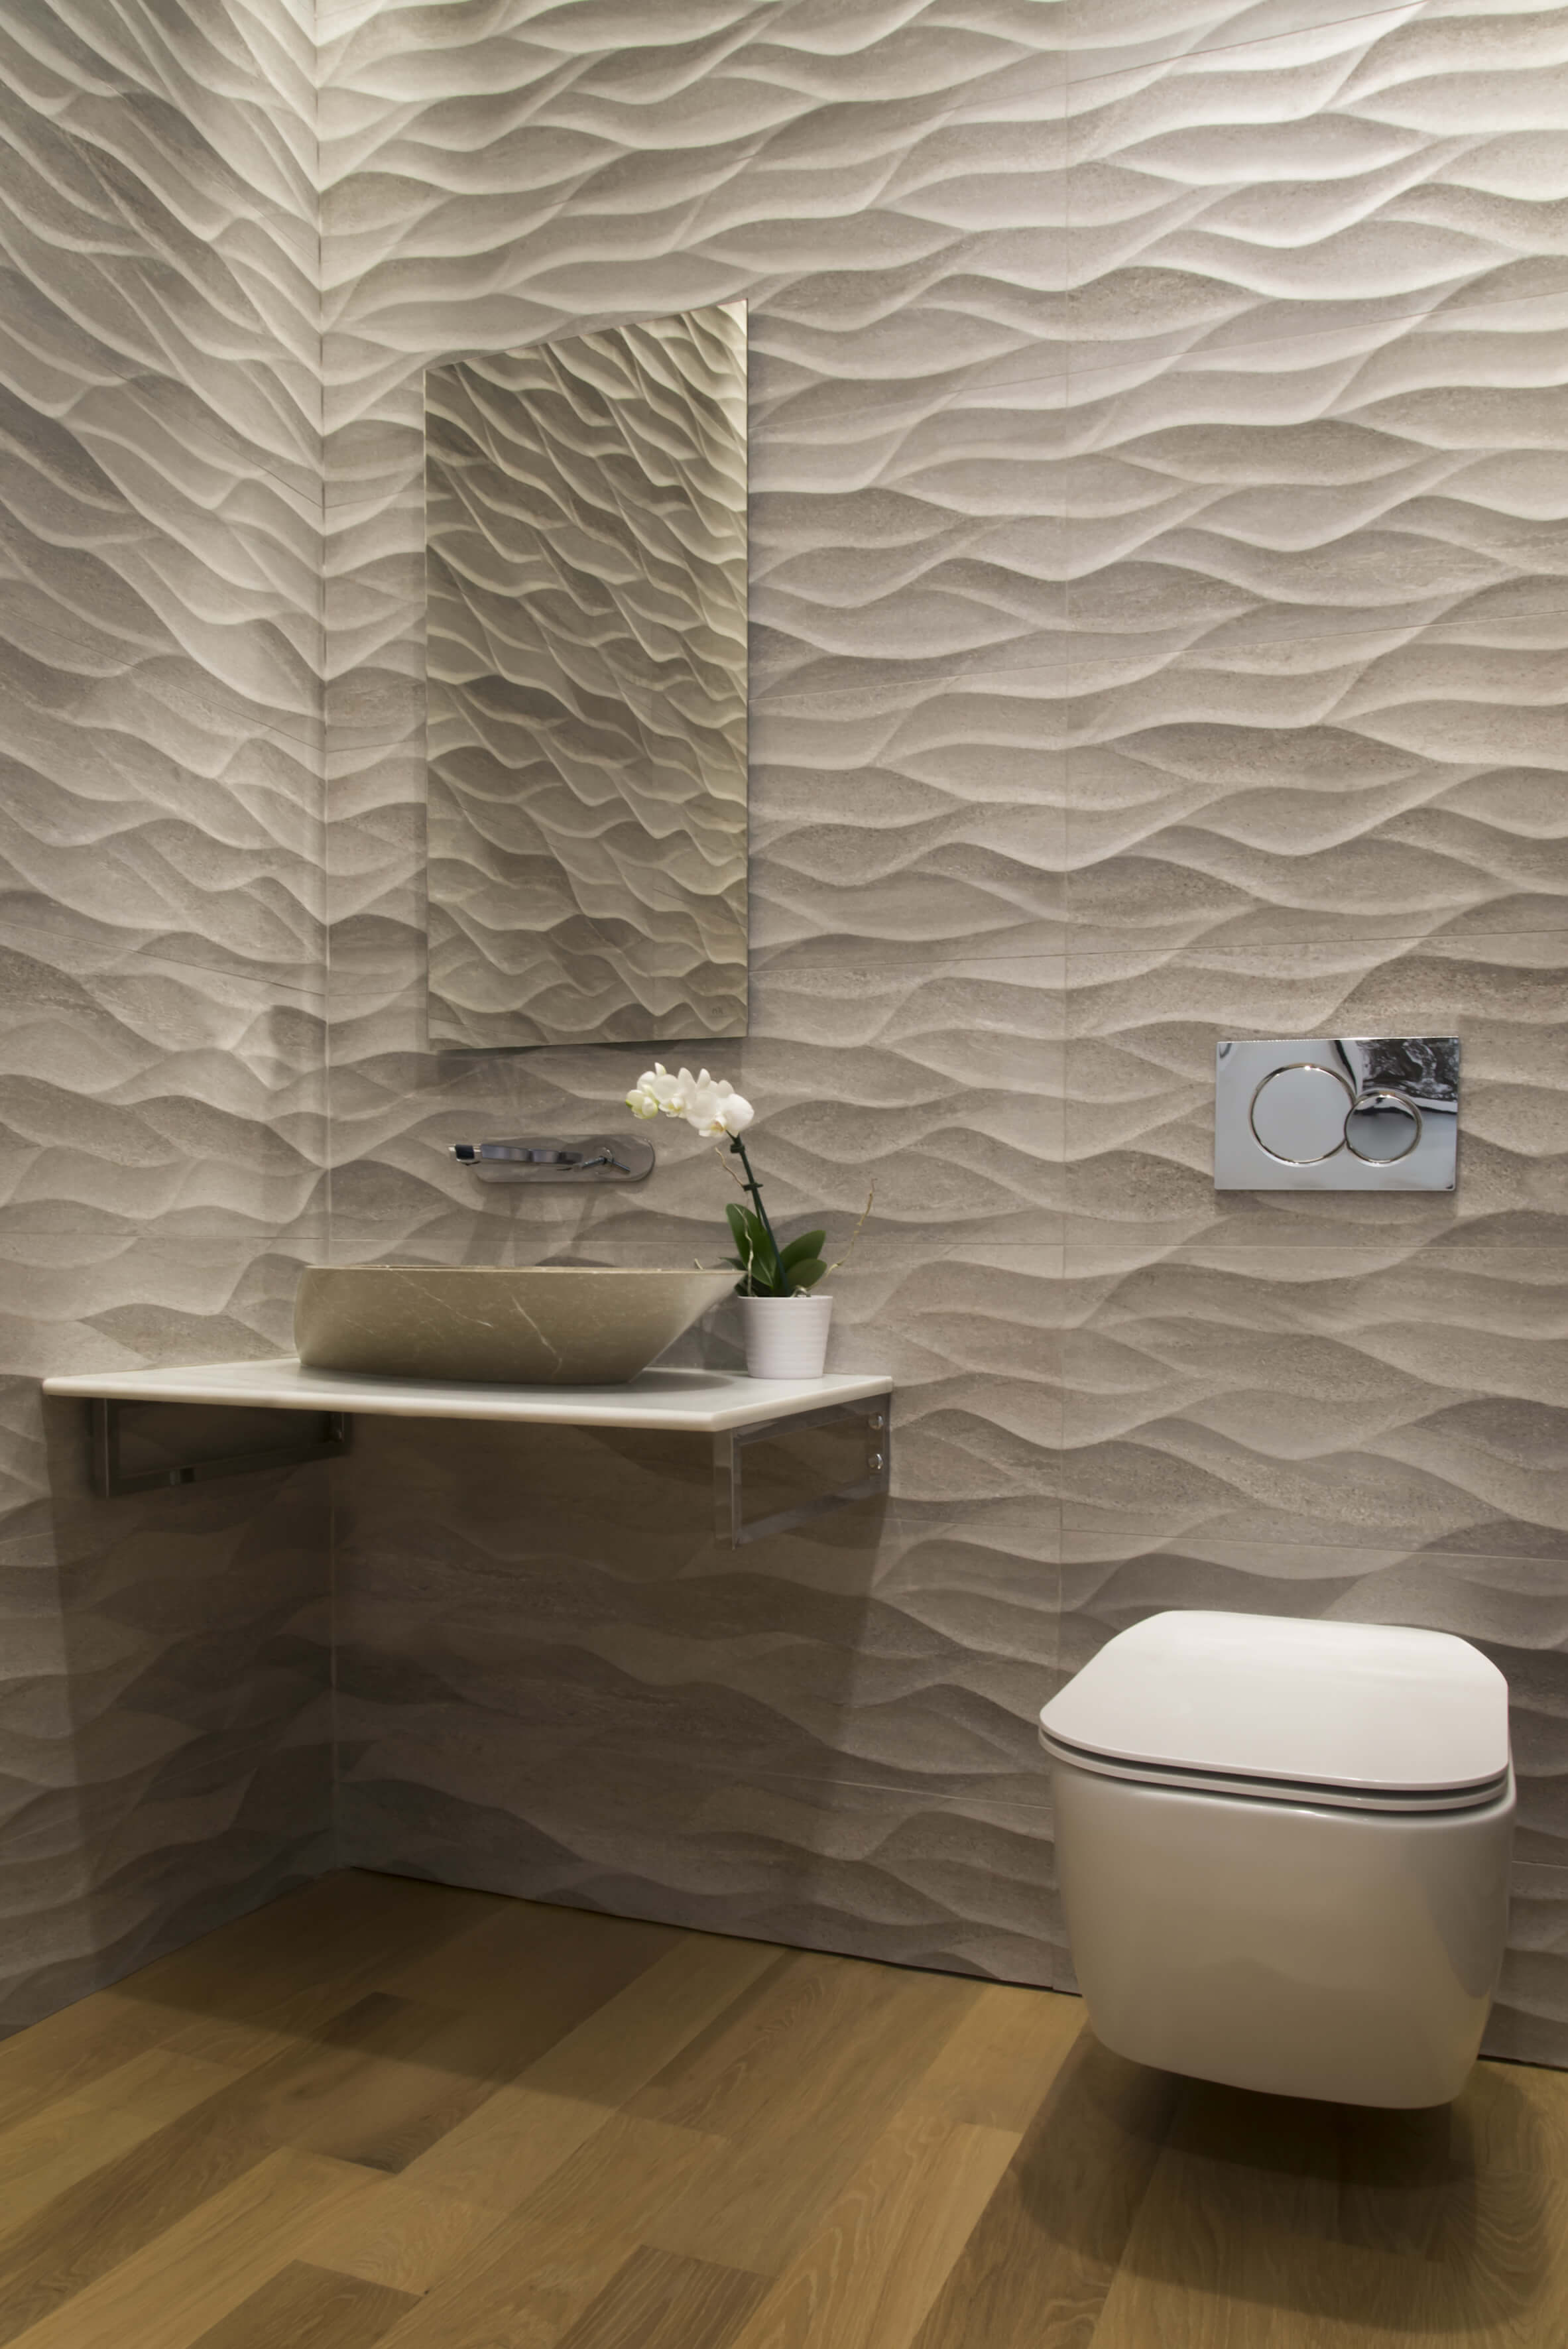 Custom contemporary bathroom with textured Porcelanosa tile designed by Interior Designer RM Interiors.